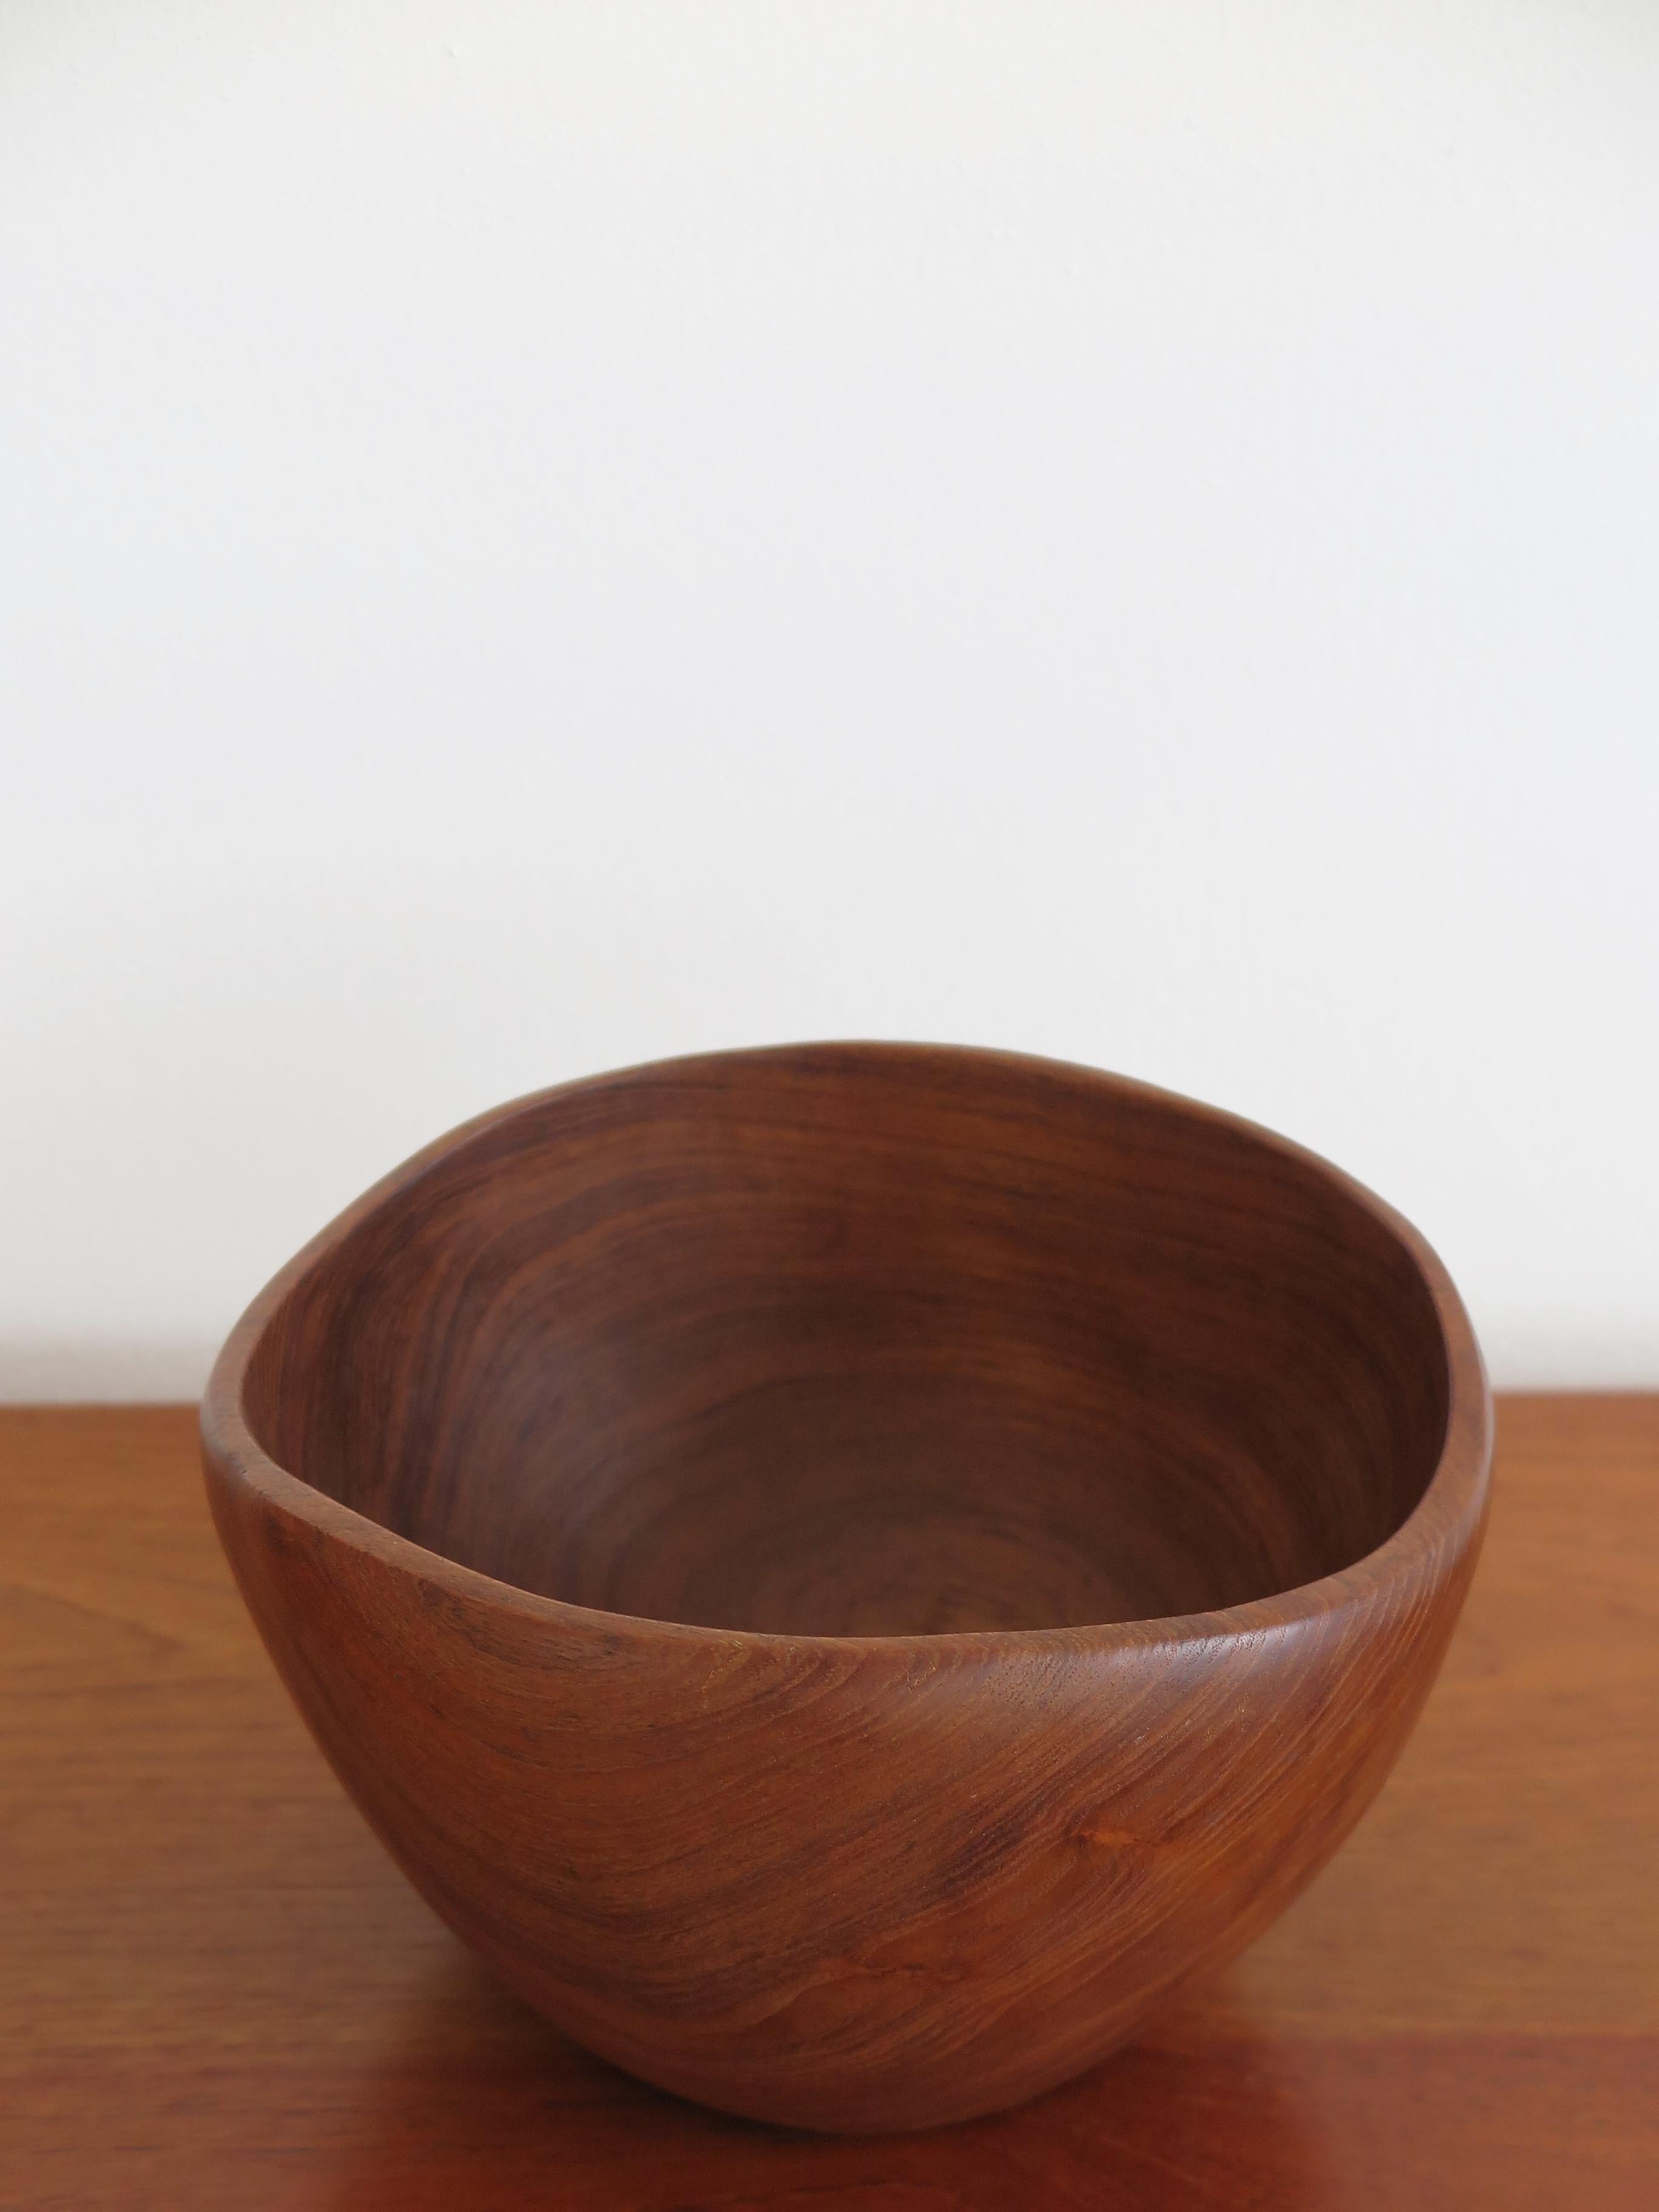 large wooden bowl centerpiece